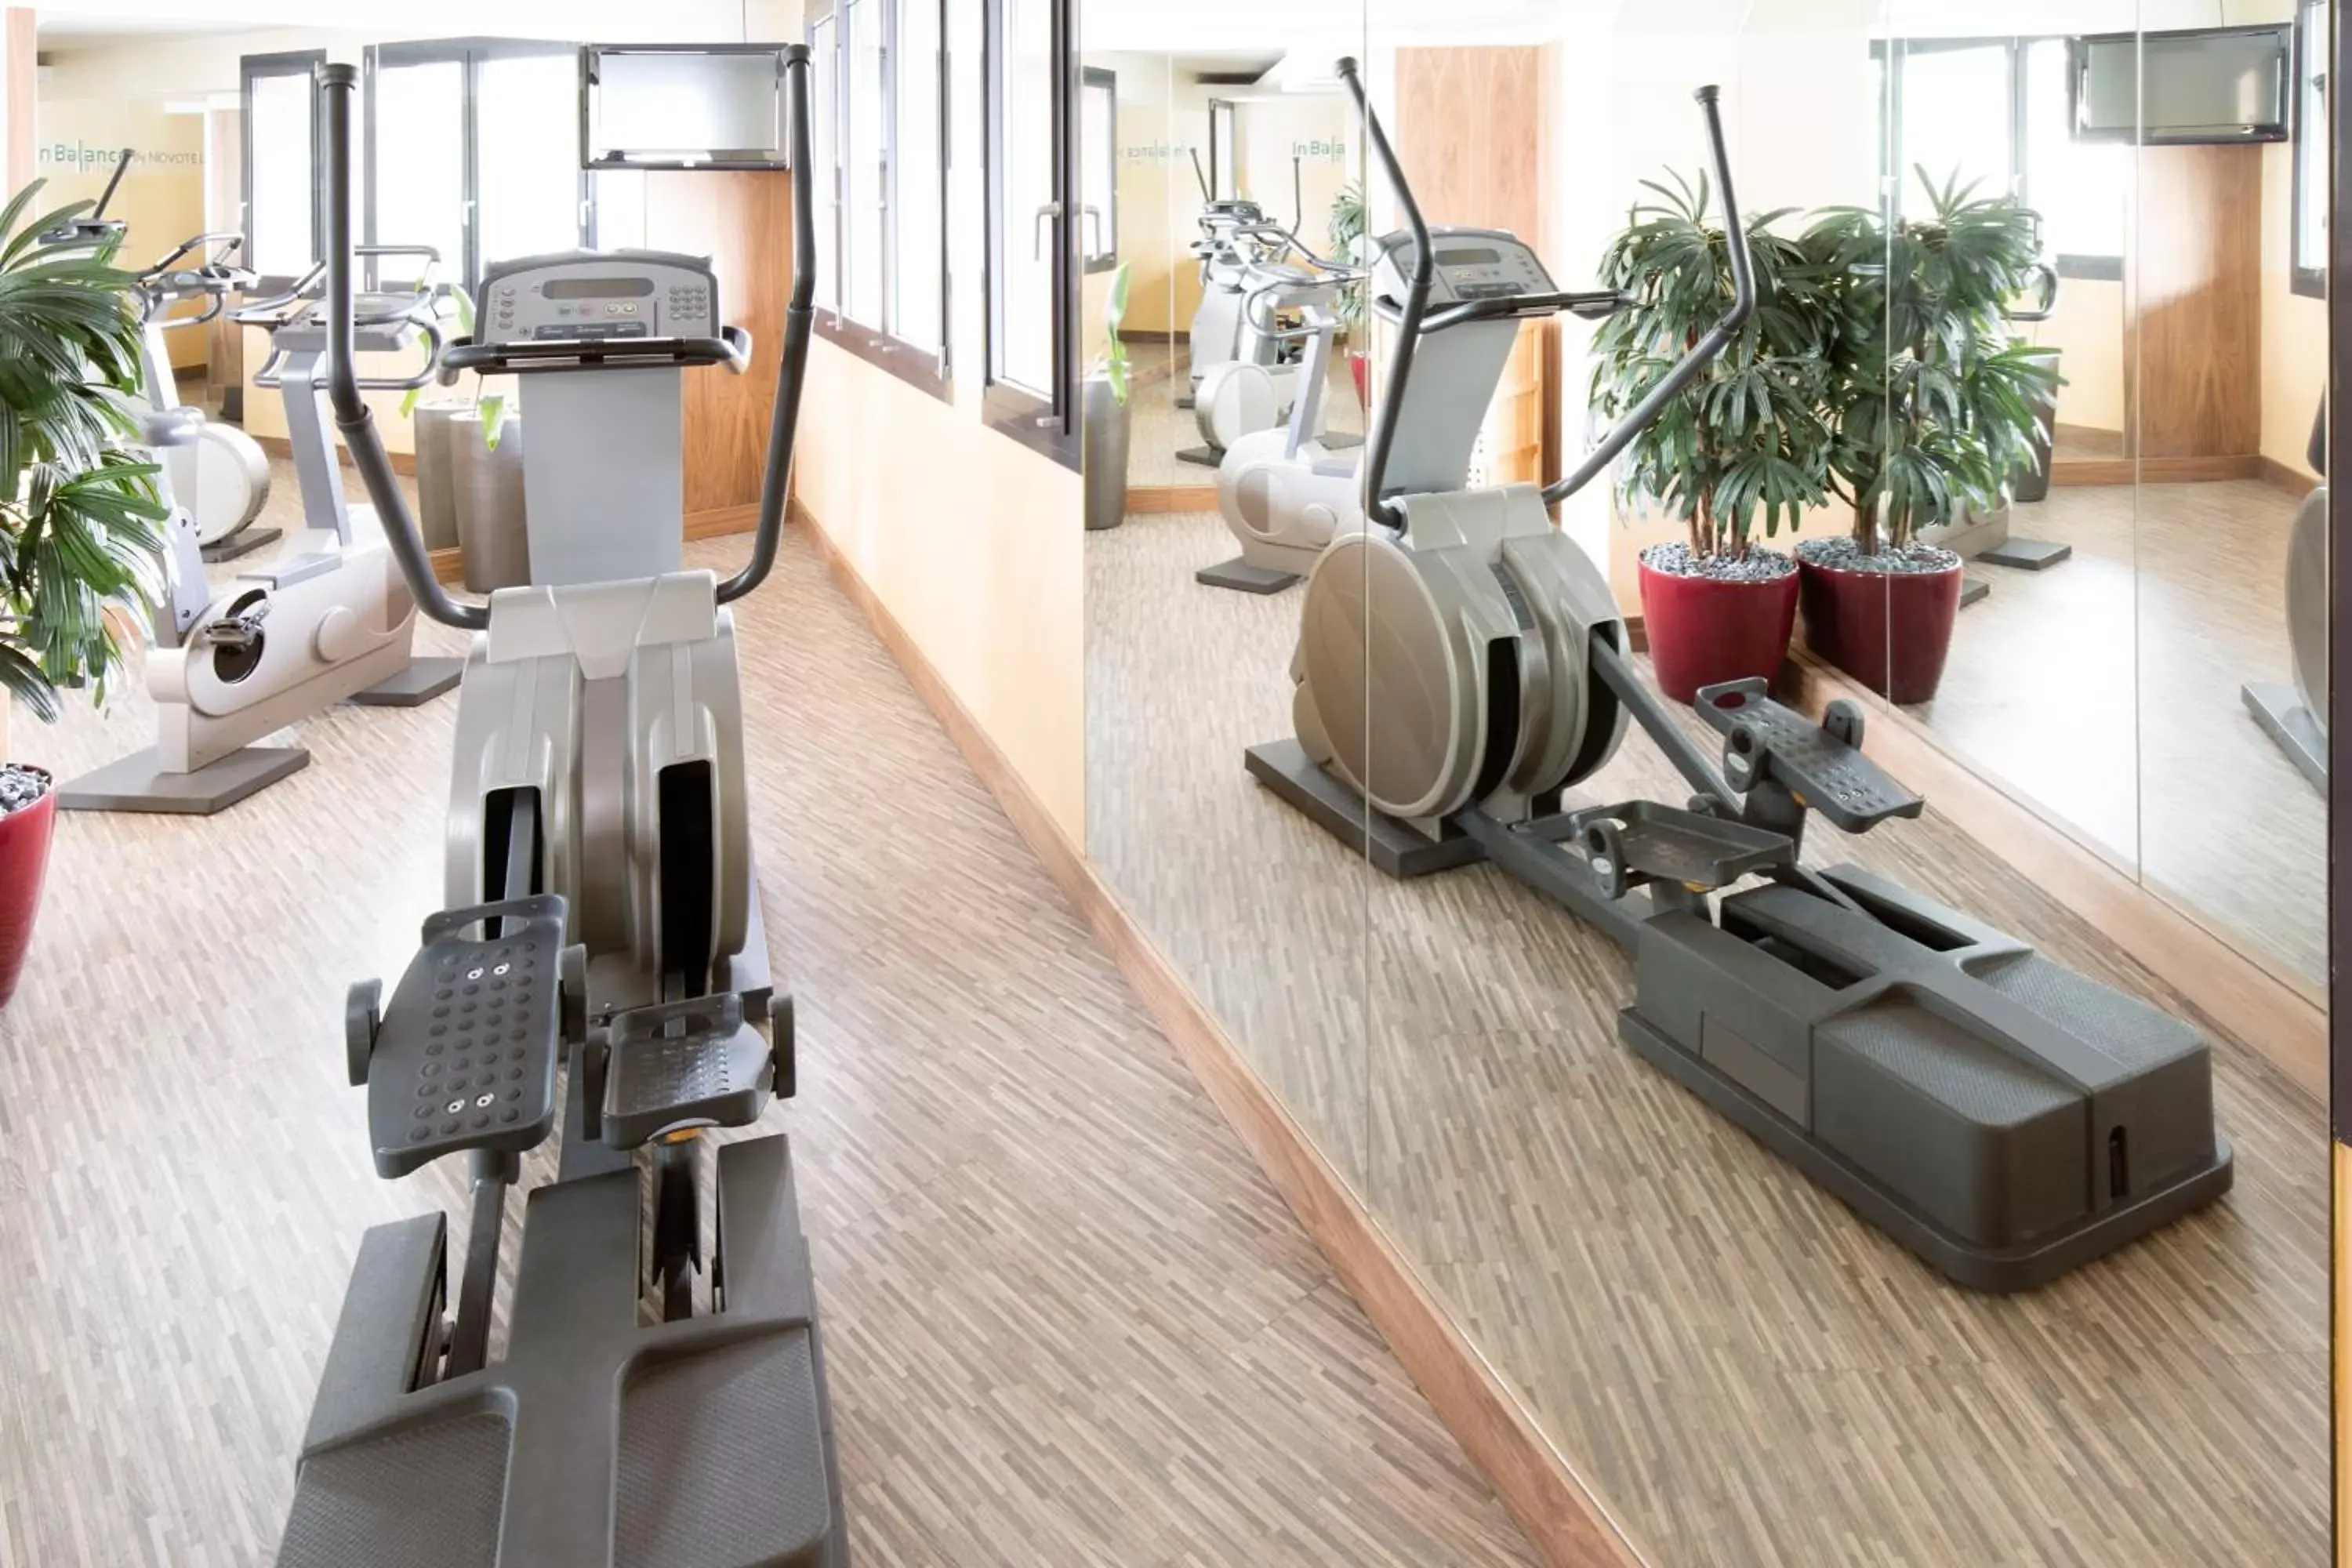 Fitness centre/facilities, Fitness Center/Facilities in Novotel Suites Berlin City Potsdamer Platz